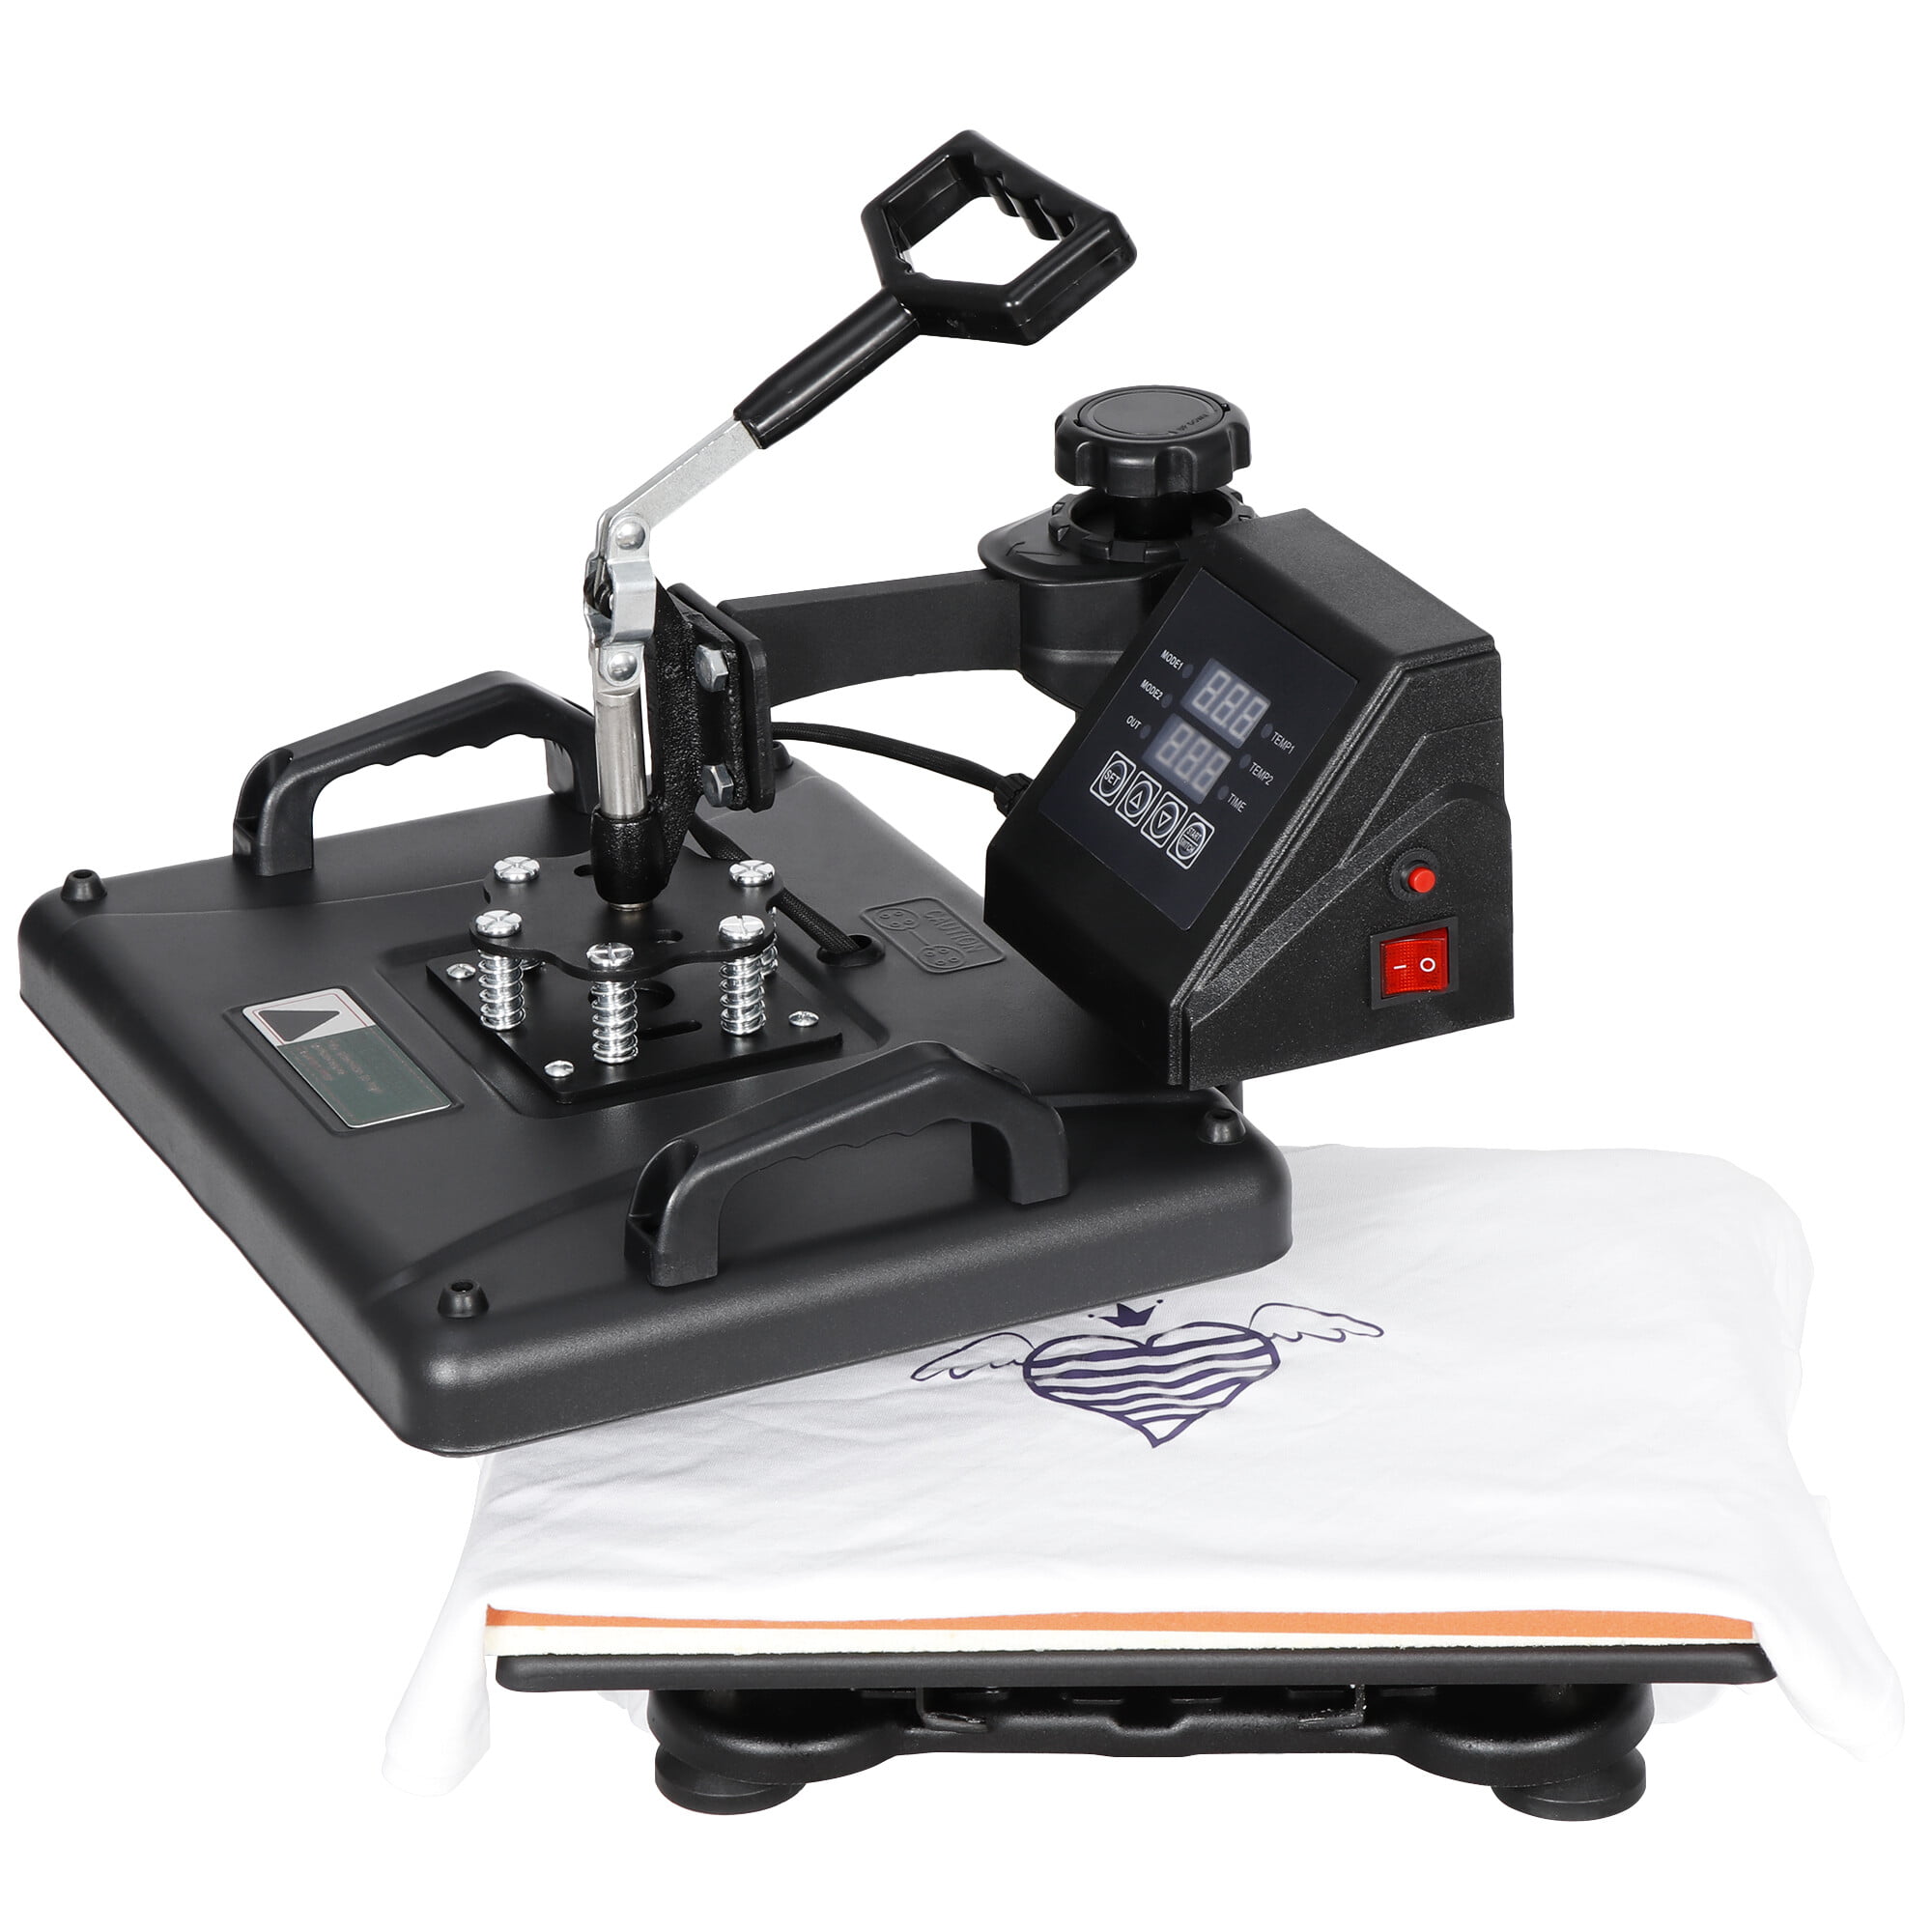 Zenstyle 5 in 1 Digital Heat Press Machine Sublimation for T-Shirt/Mug/Plate Hat Printer, Adult Unisex, Size: Large, Black